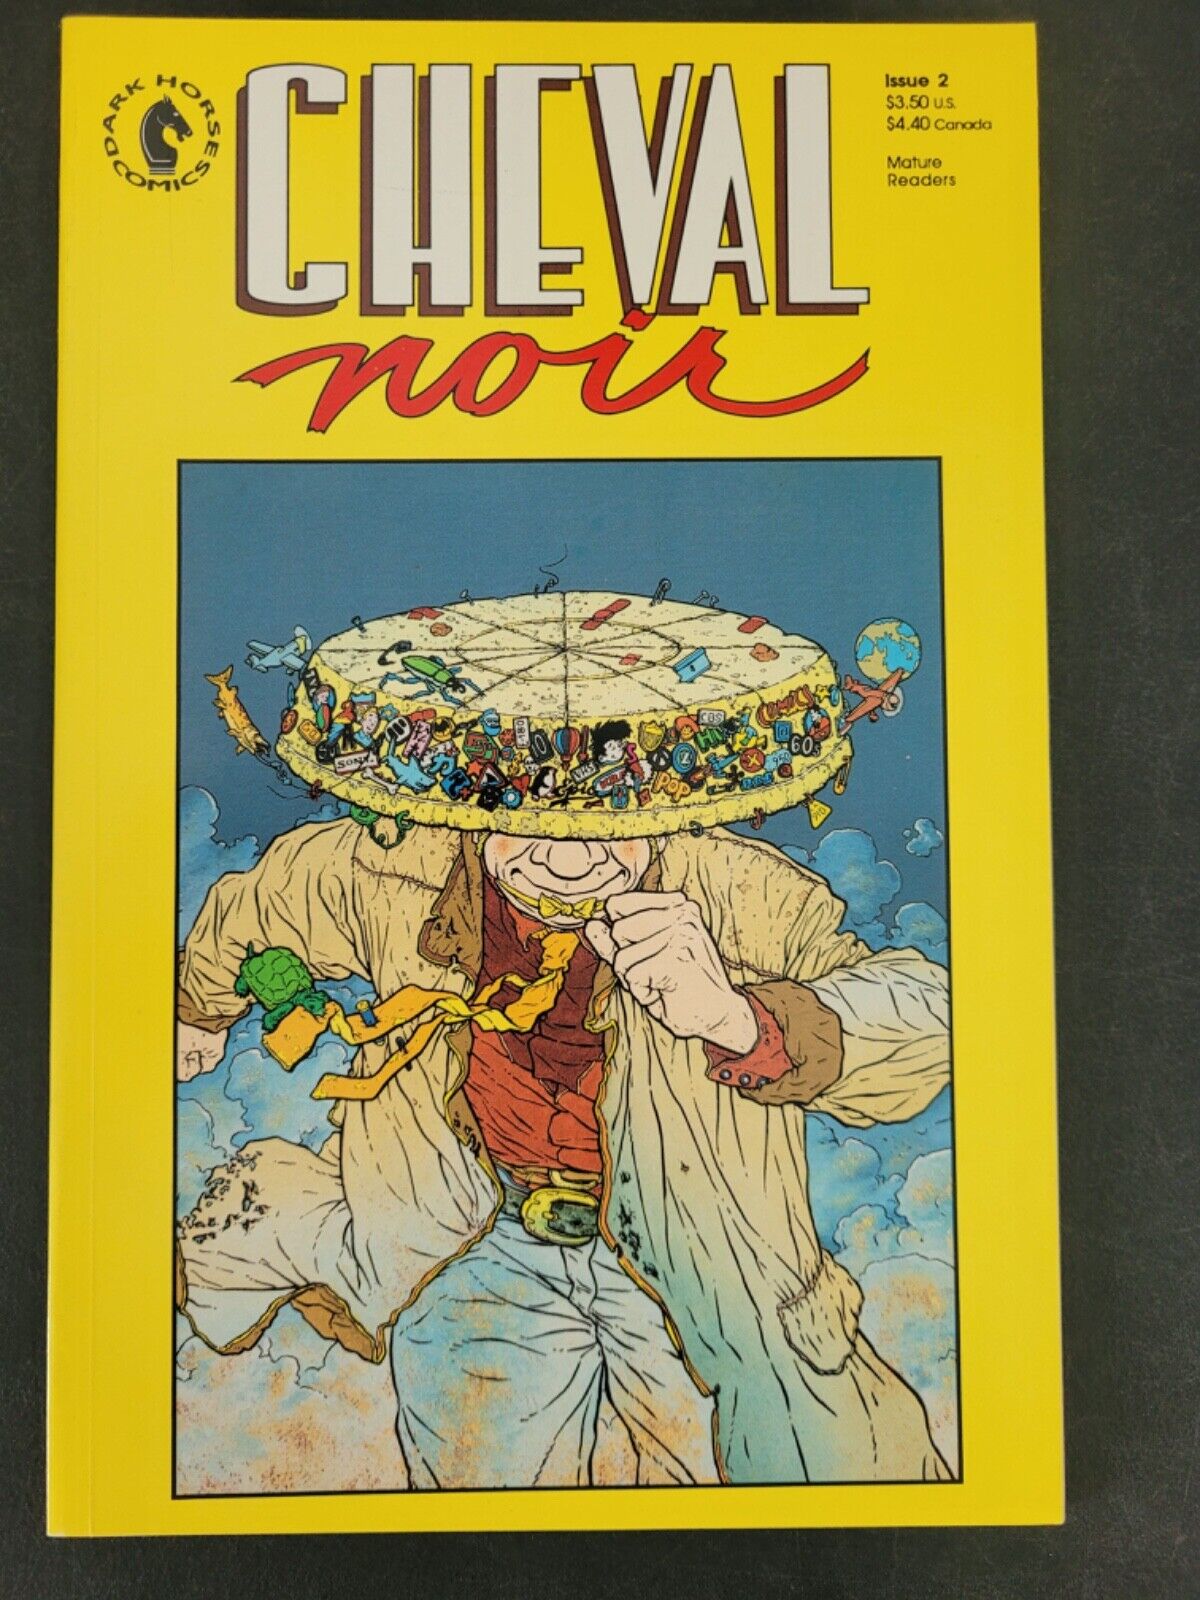 CHEVAL NOIR #2 Prestige Format (1989) DARK HORSE COMICS GEOF DARROW COVER ART